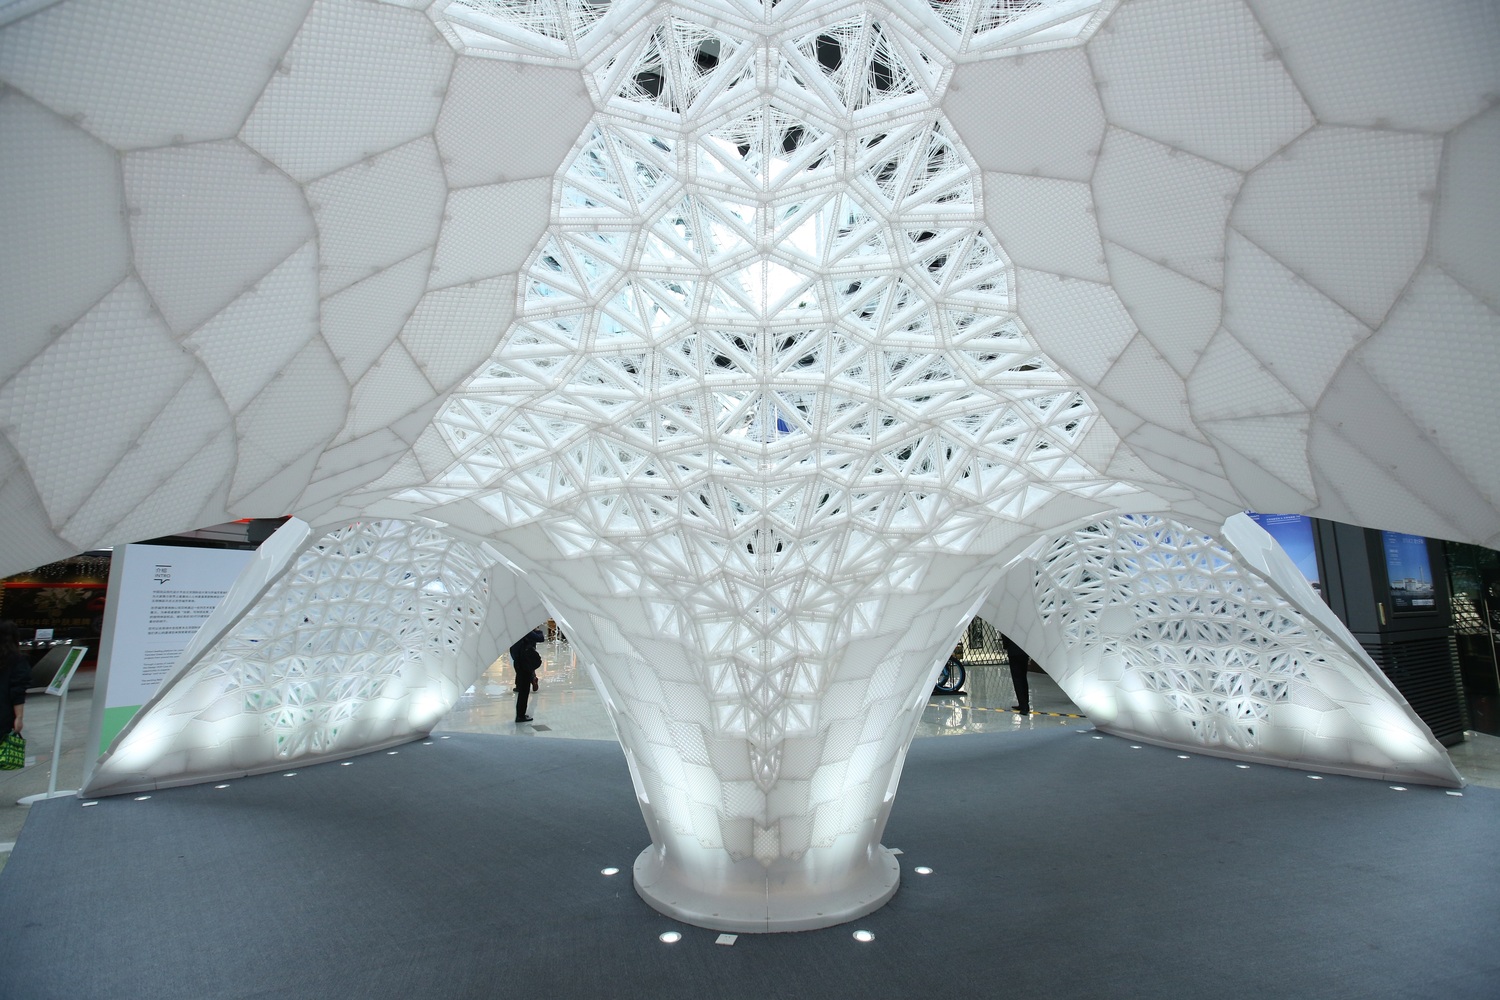 Laboratory for creative design - 3D printed design. Architectural trends